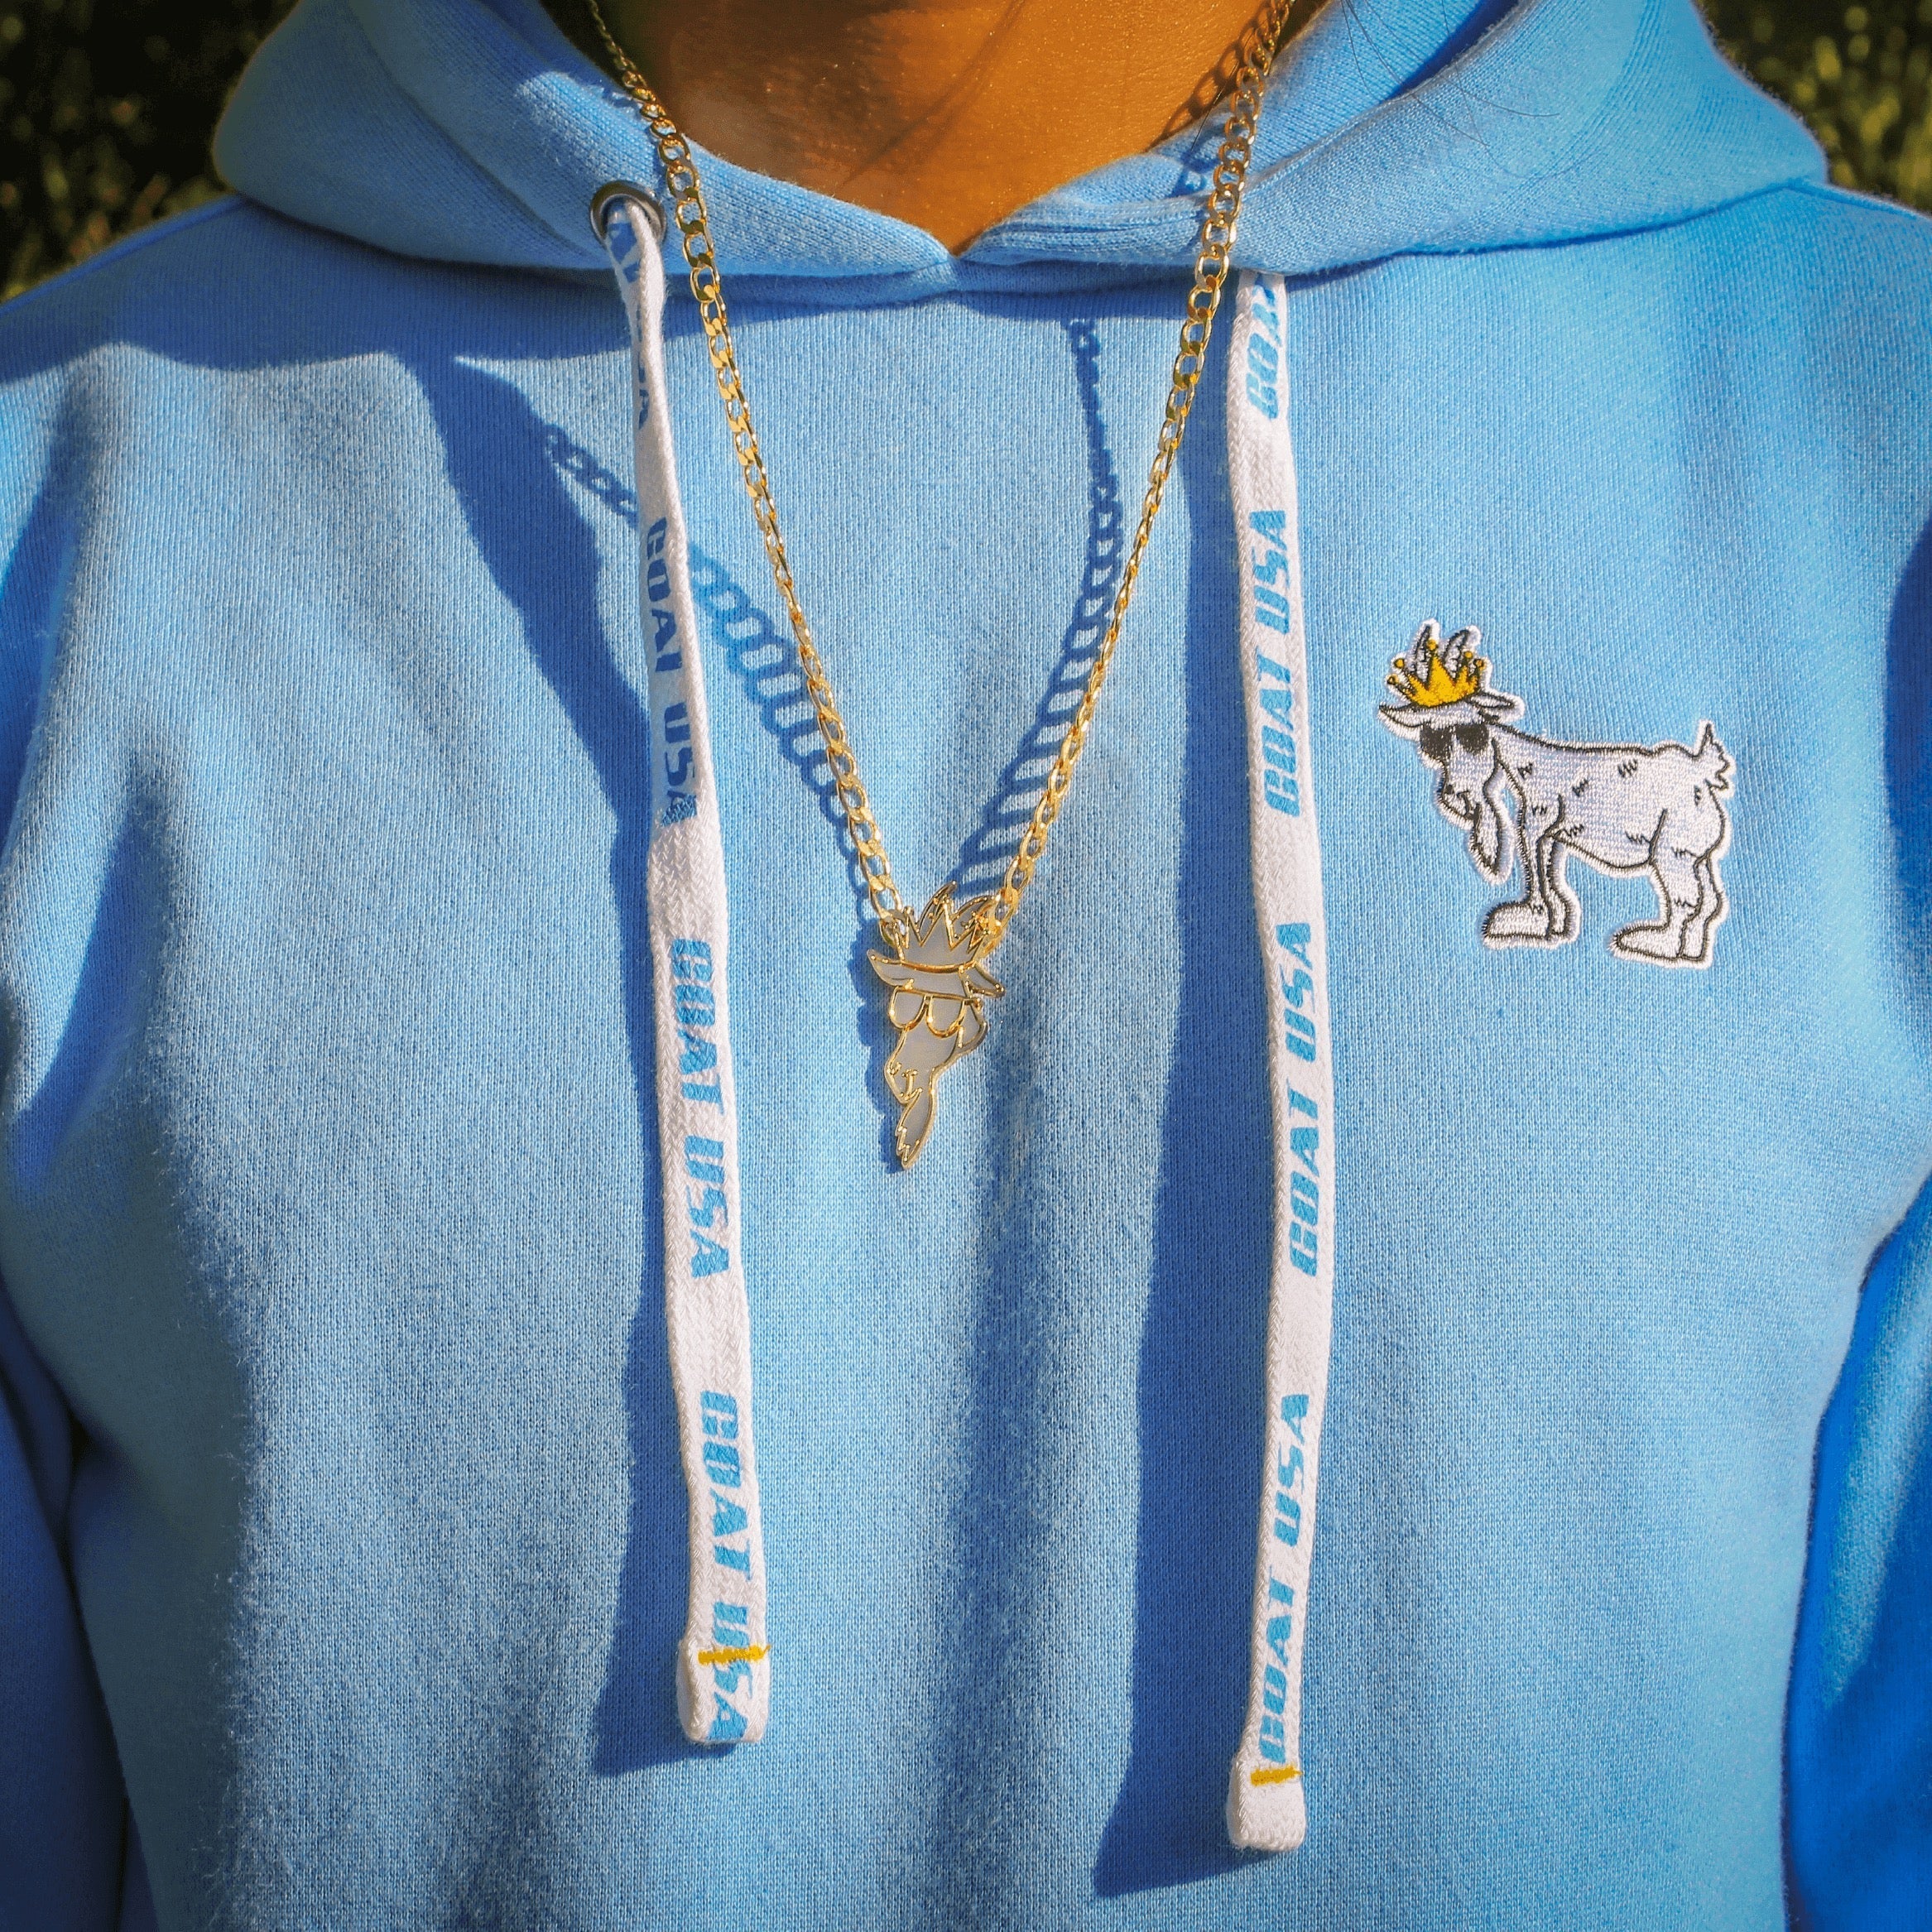 Carolina Blue Hooded Sweatshirt with Gold Chain